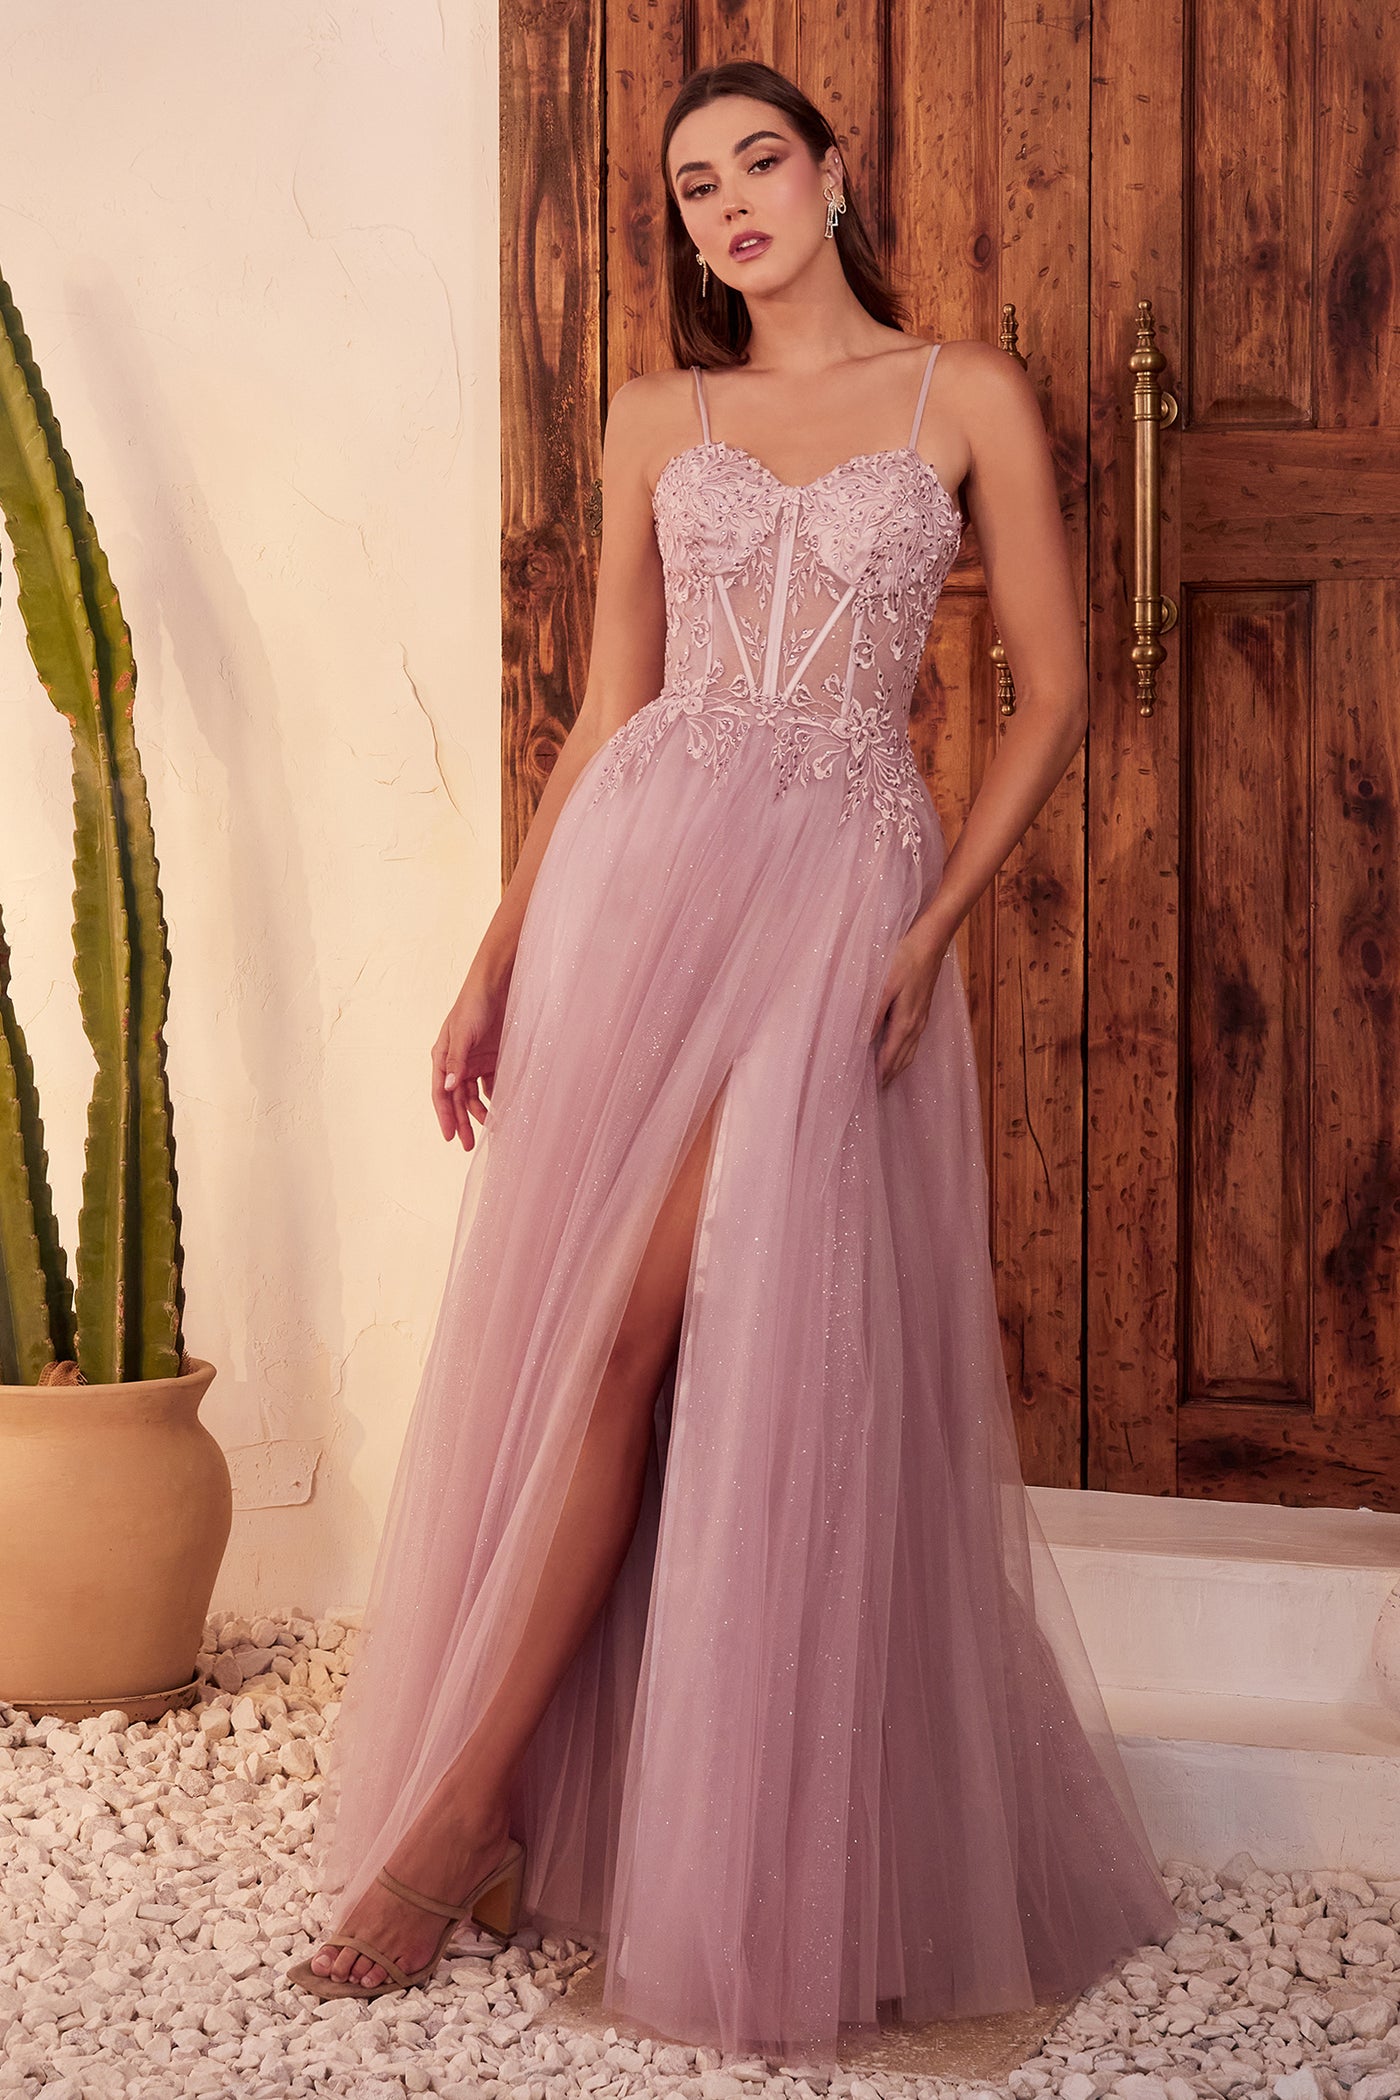 Cinderella Divine C150 B Chic Fashions Long Dress Evening Gowns